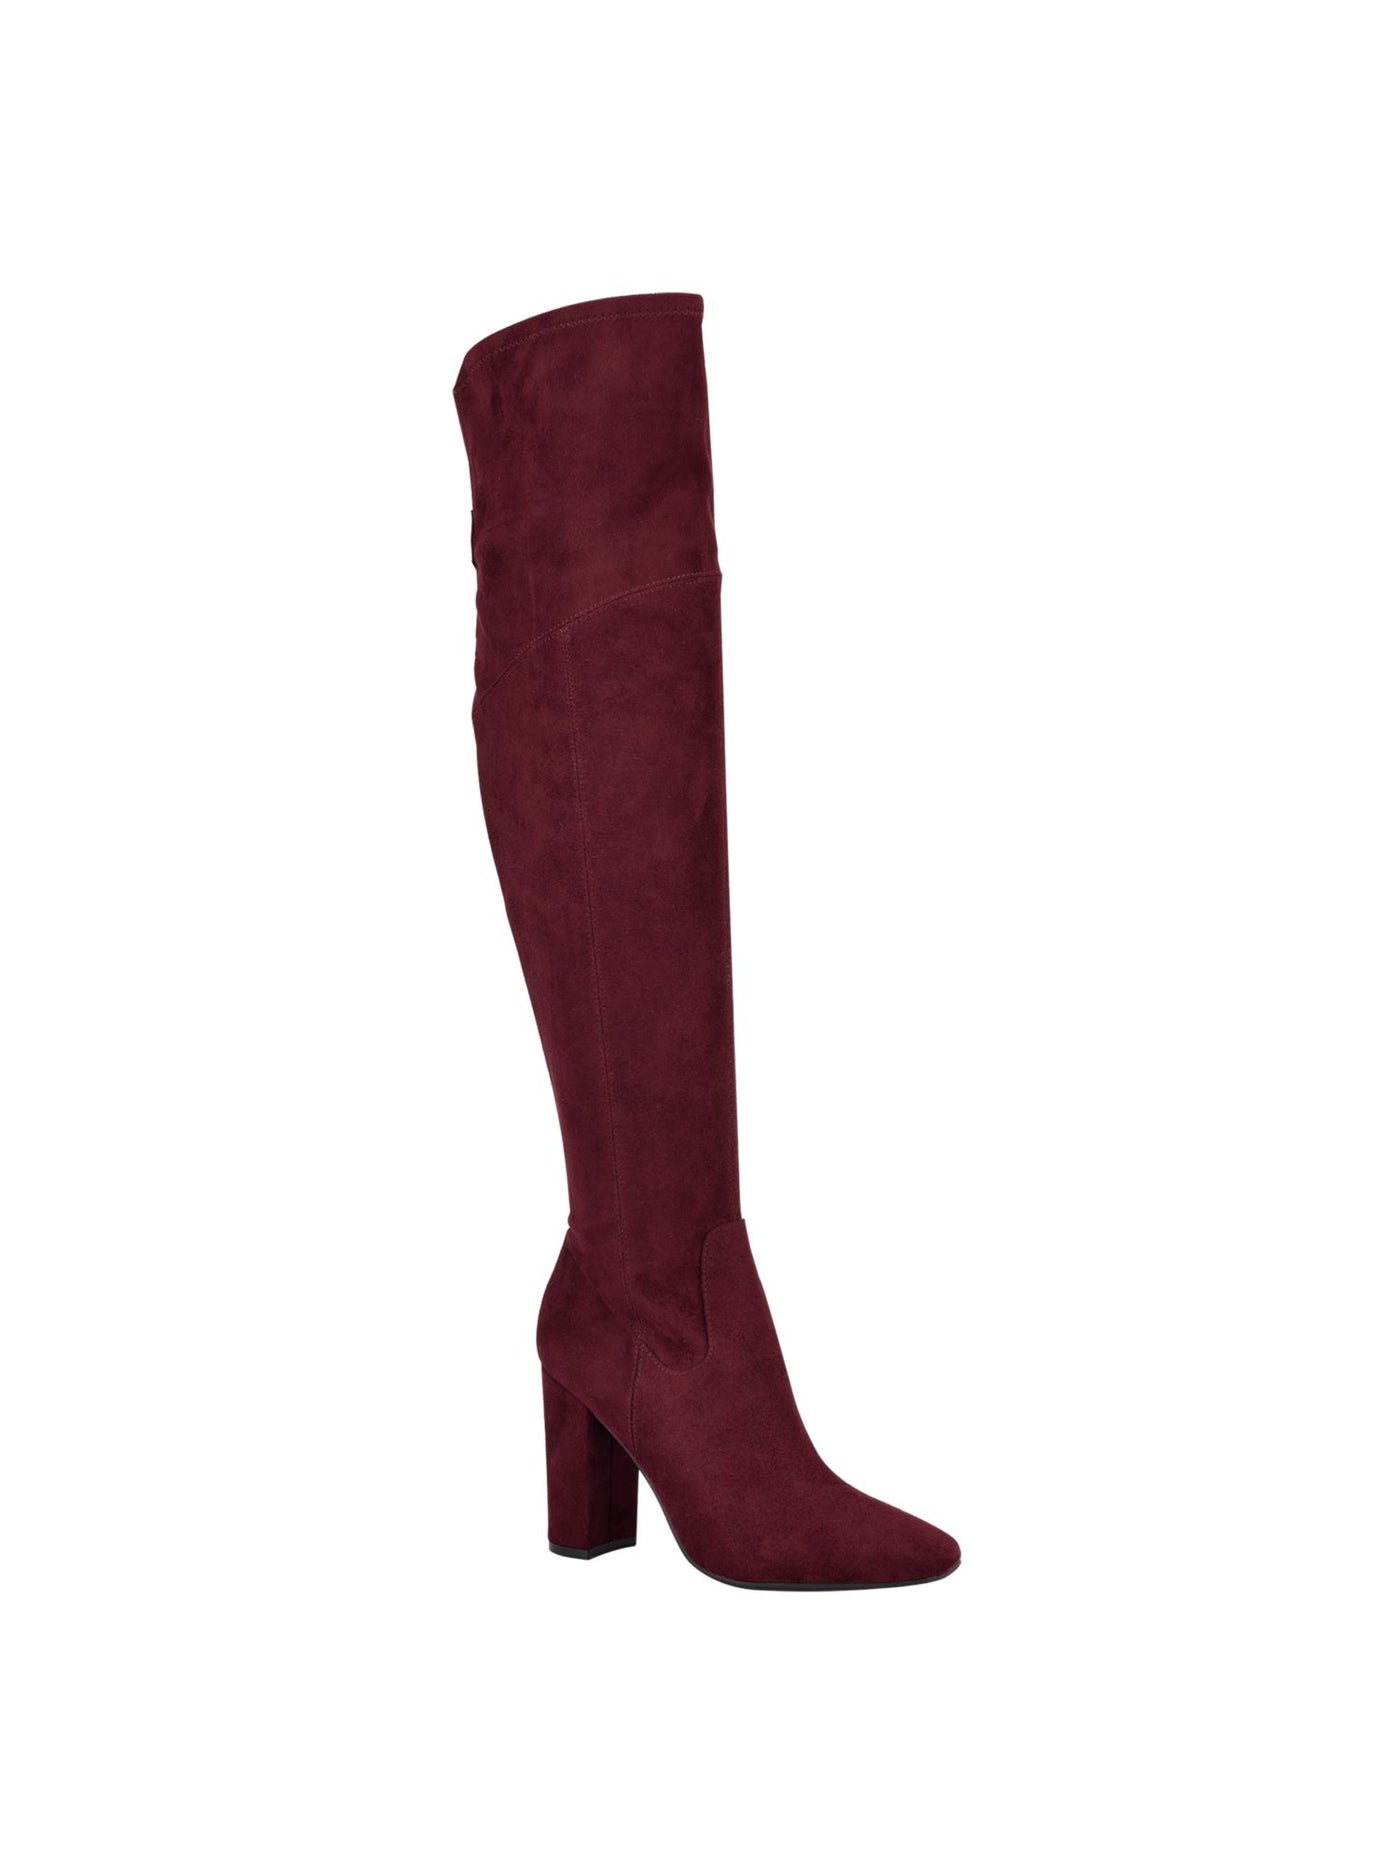 GUESS Womens Burgundy Gore Stretch Logo Mireya Square Toe Block Heel Zip-Up Dress Boots 9 M